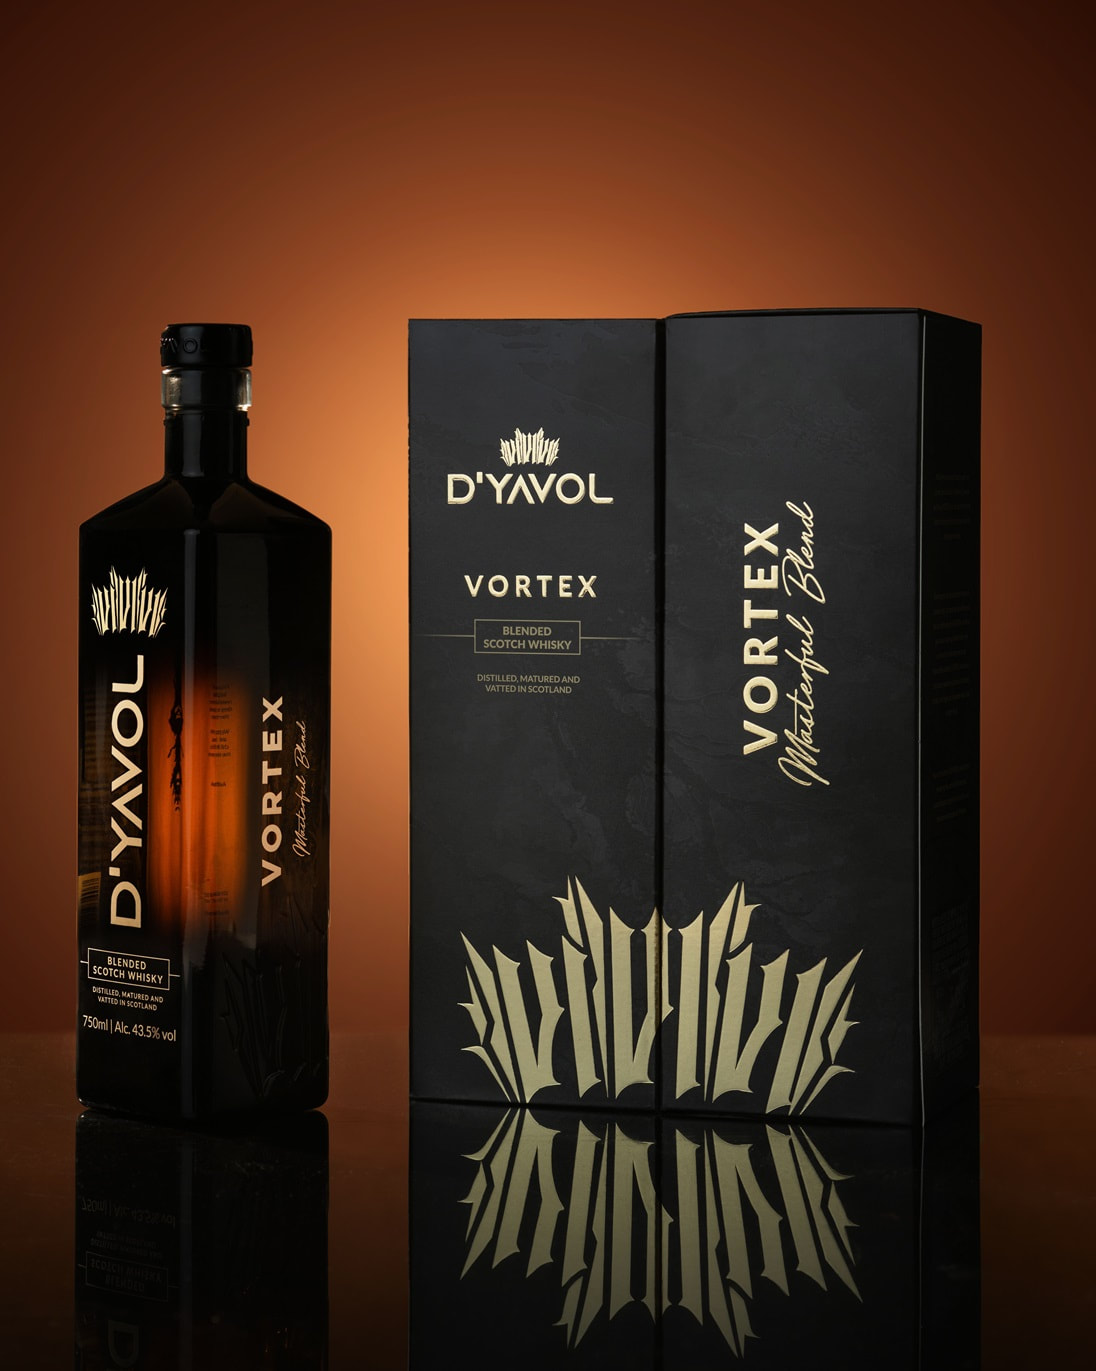 D'Yavol Vortex Blended Scotch Whisky